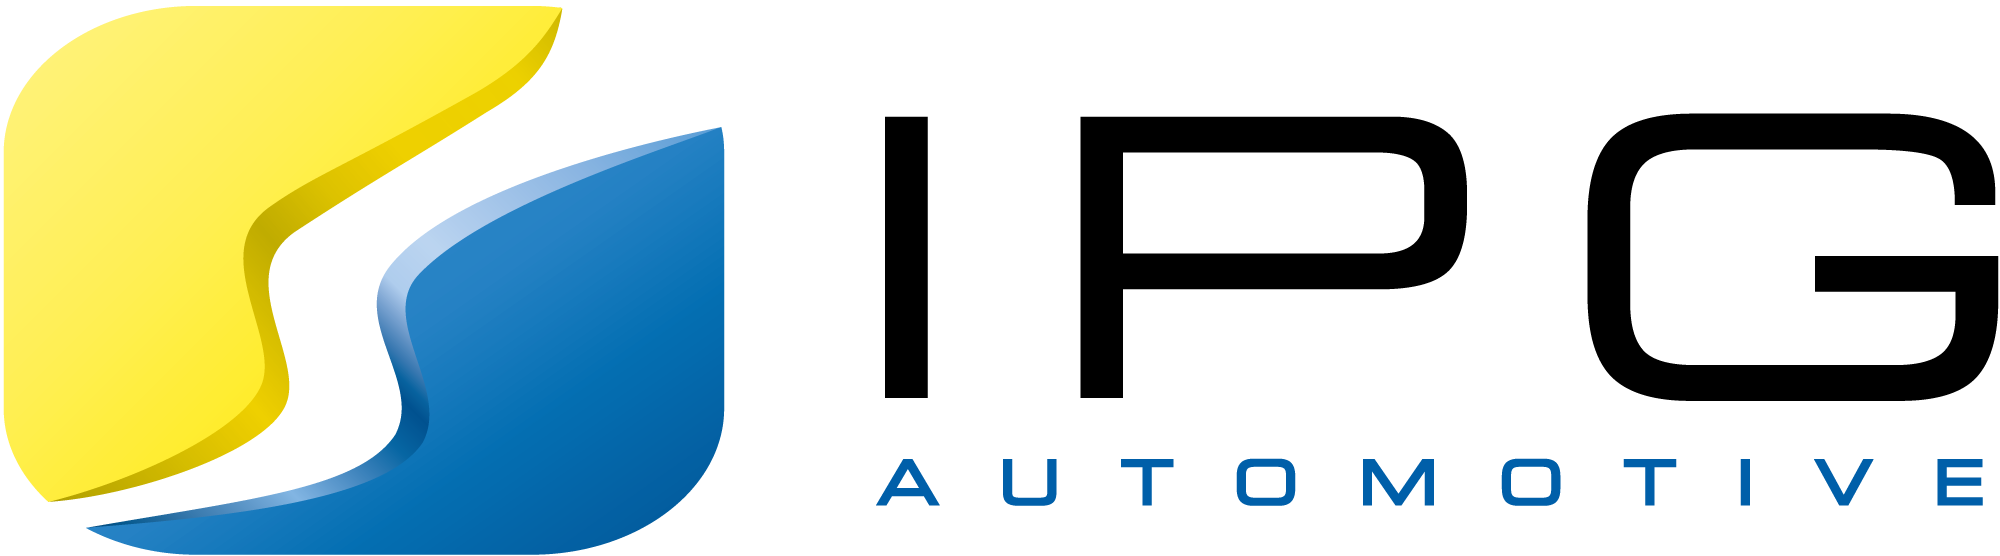 IPG Automotive logo transparent web